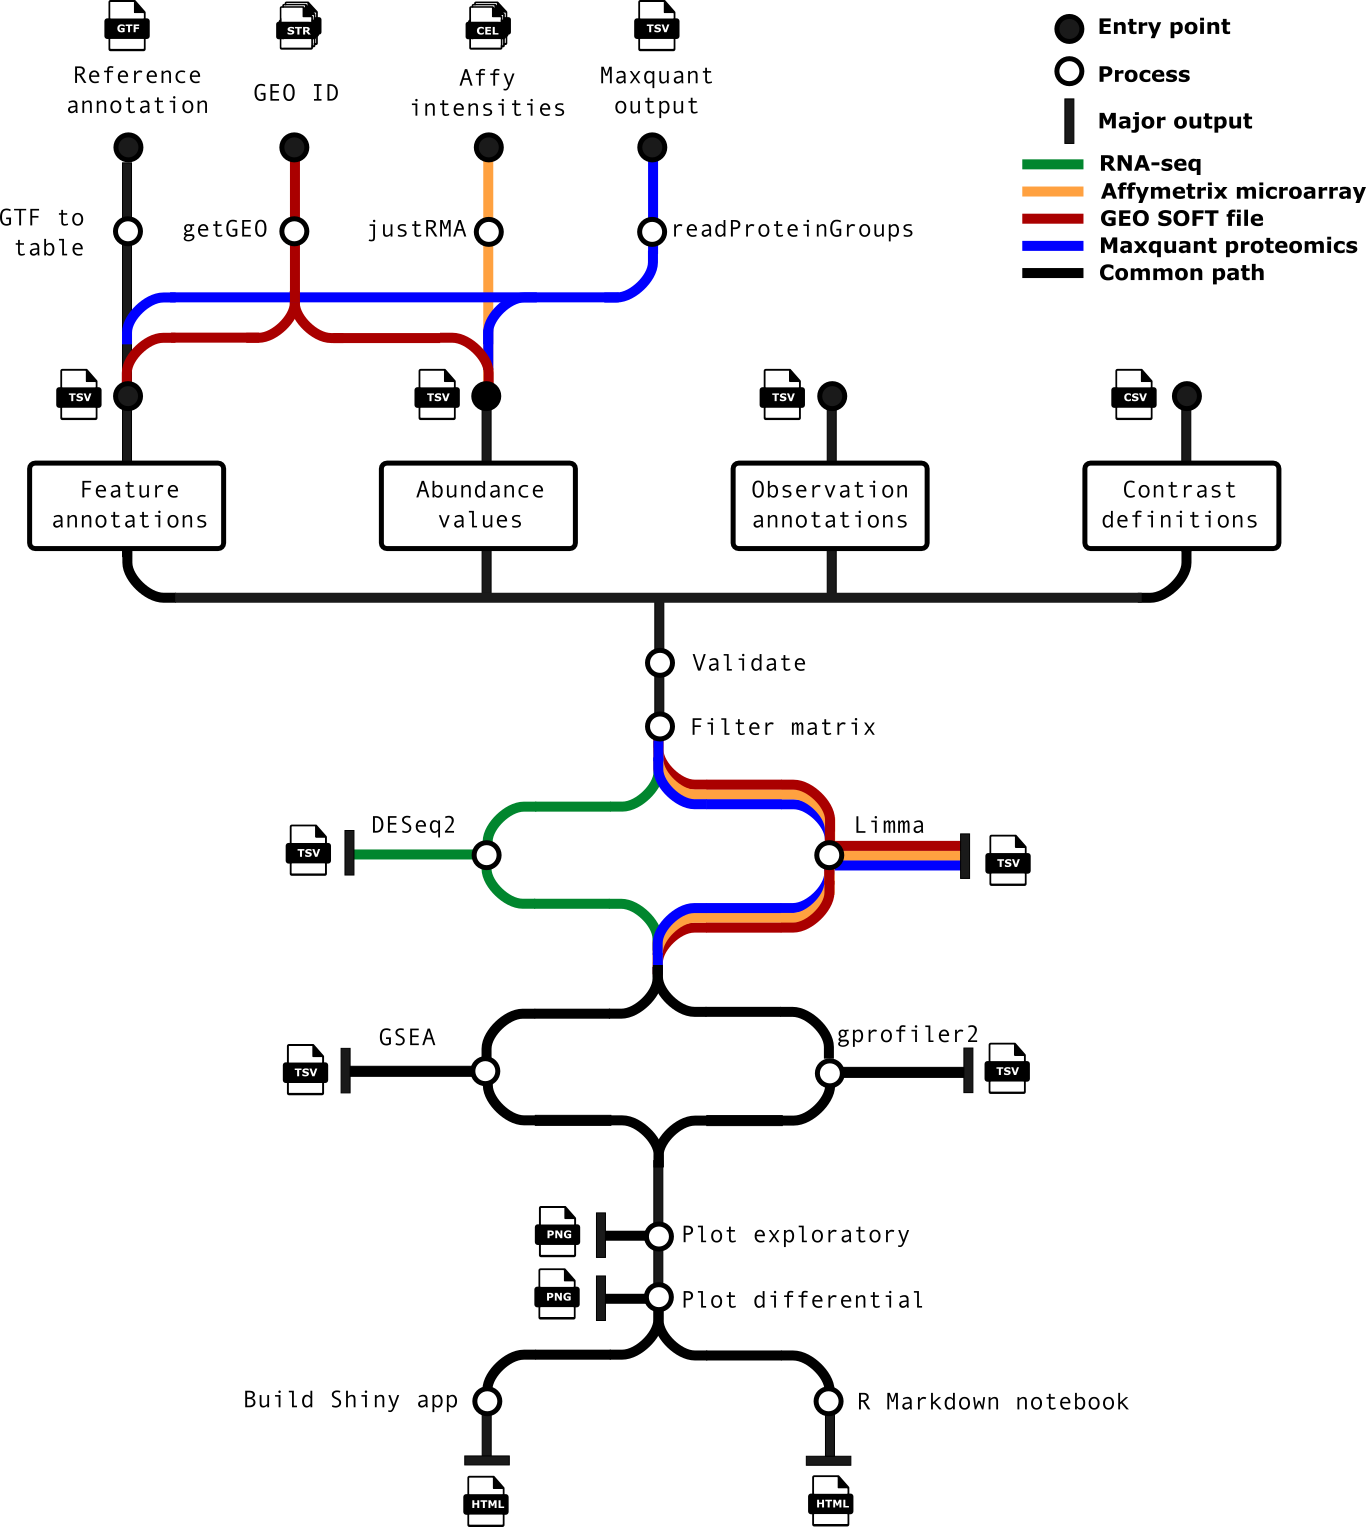 nf-core/differentialabundance metro map